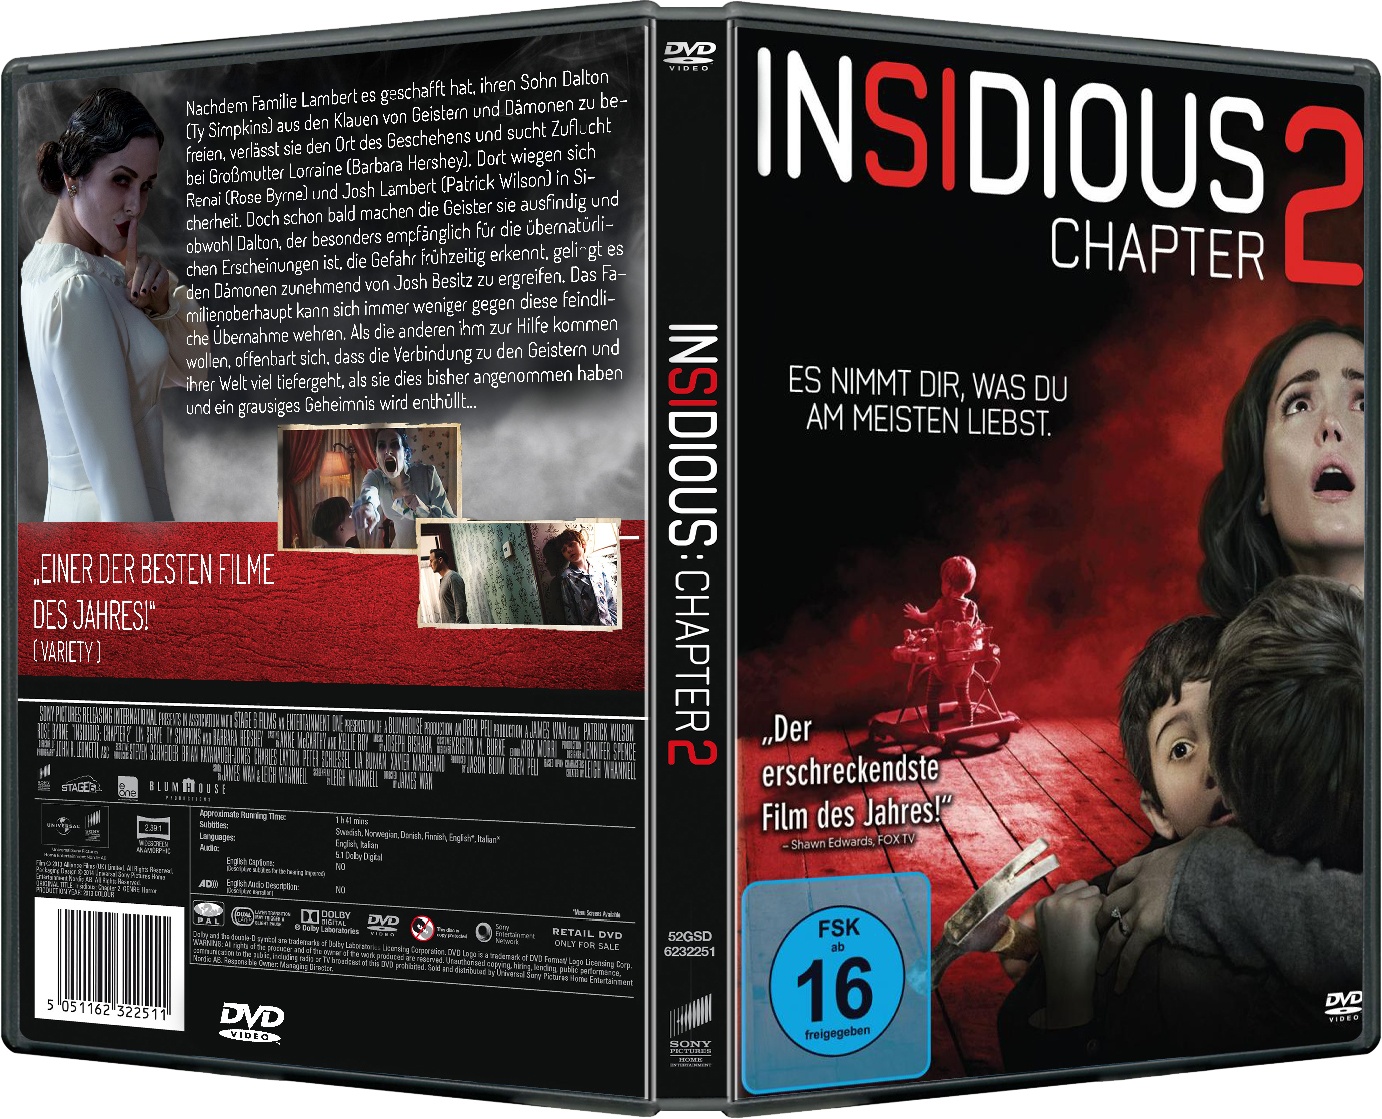 Insidious 2 DVD Cover German box cover